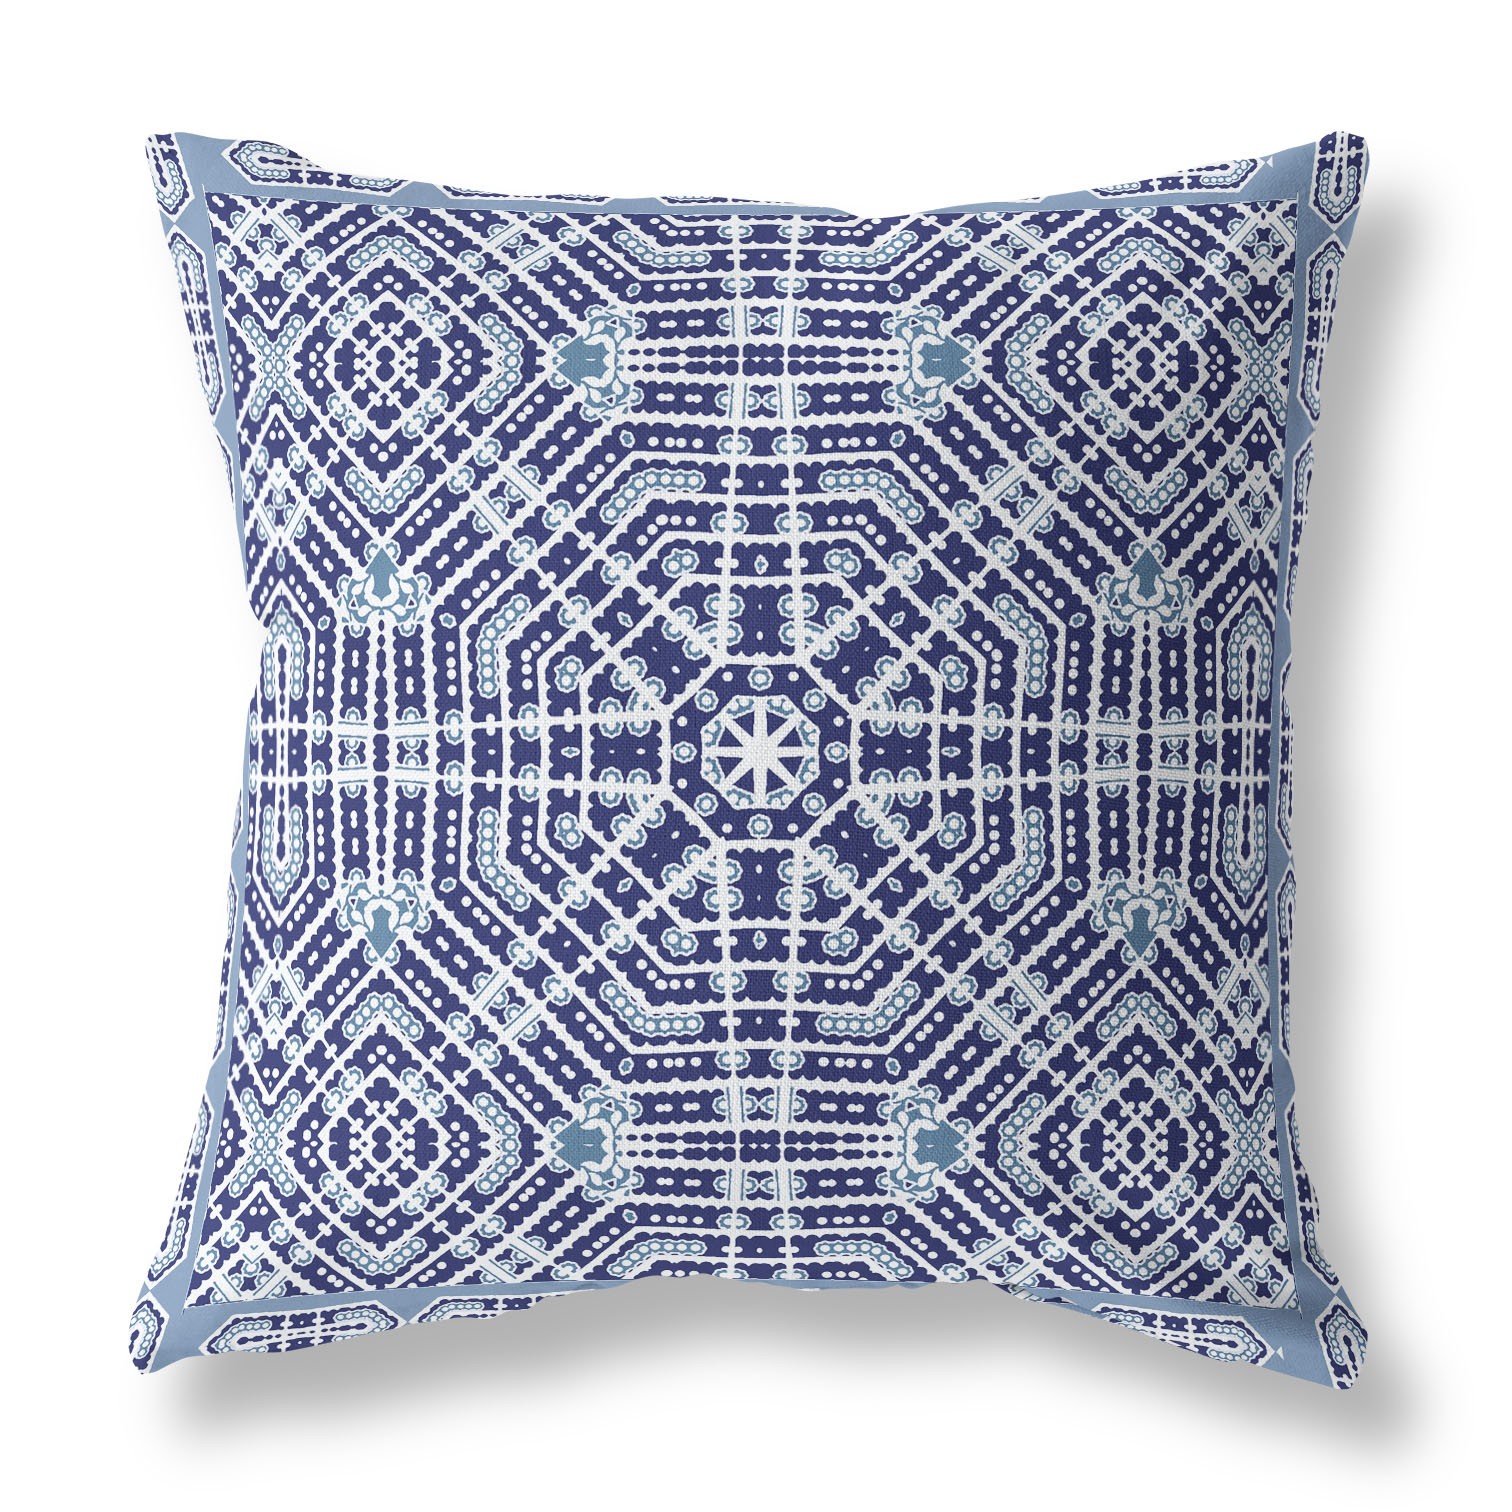 18” Indigo Blue Geostar Indoor Outdoor Throw Pillow-415024-1